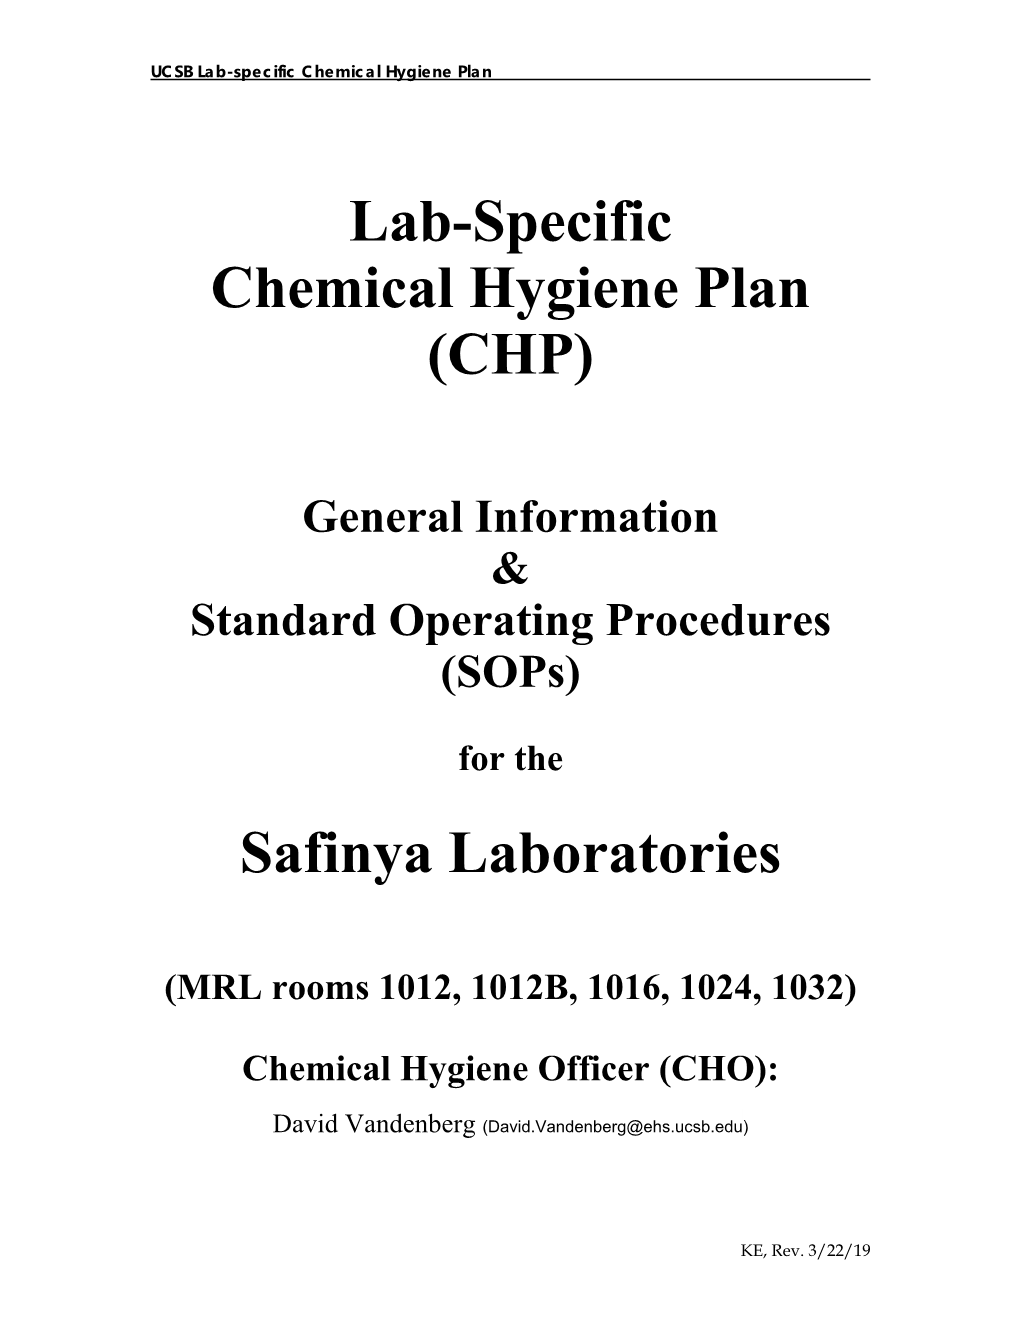 Lab-Specific Chemical Hygiene Plan (CHP) Safinya Laboratories